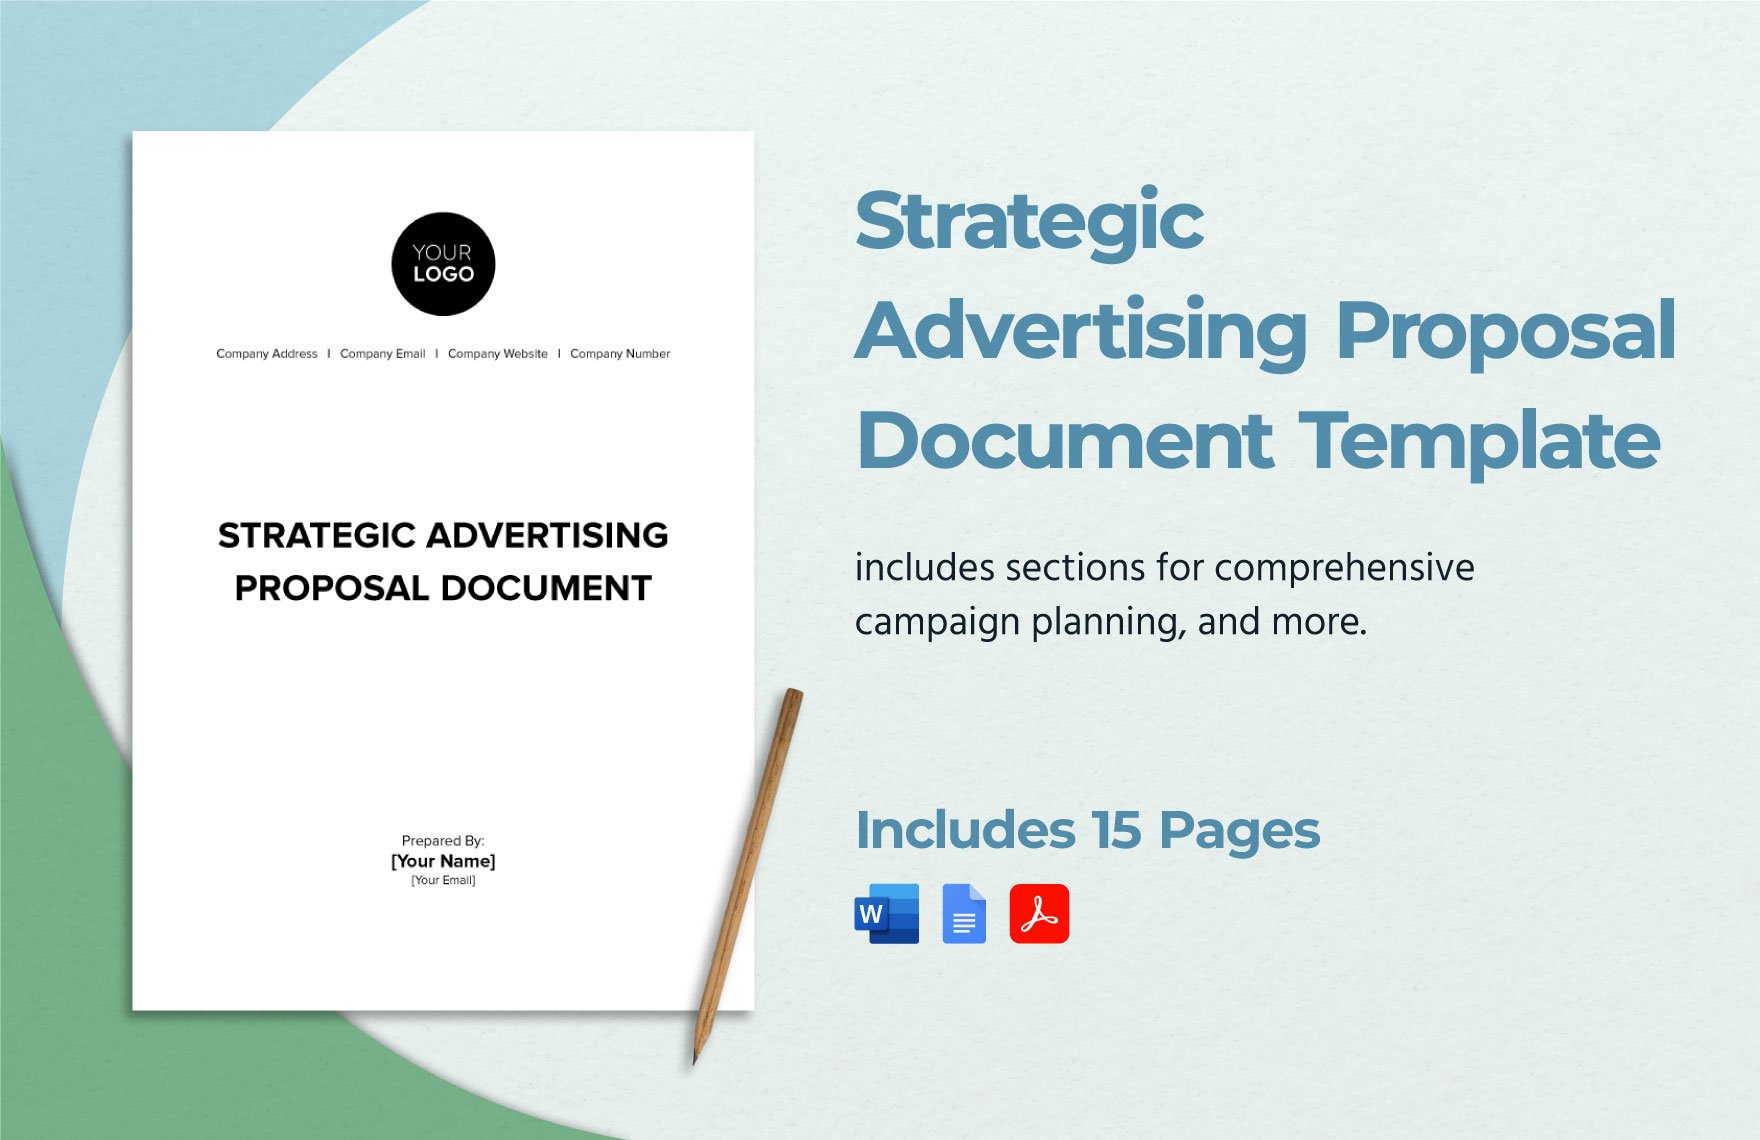 Strategic Advertising Proposal Document Template